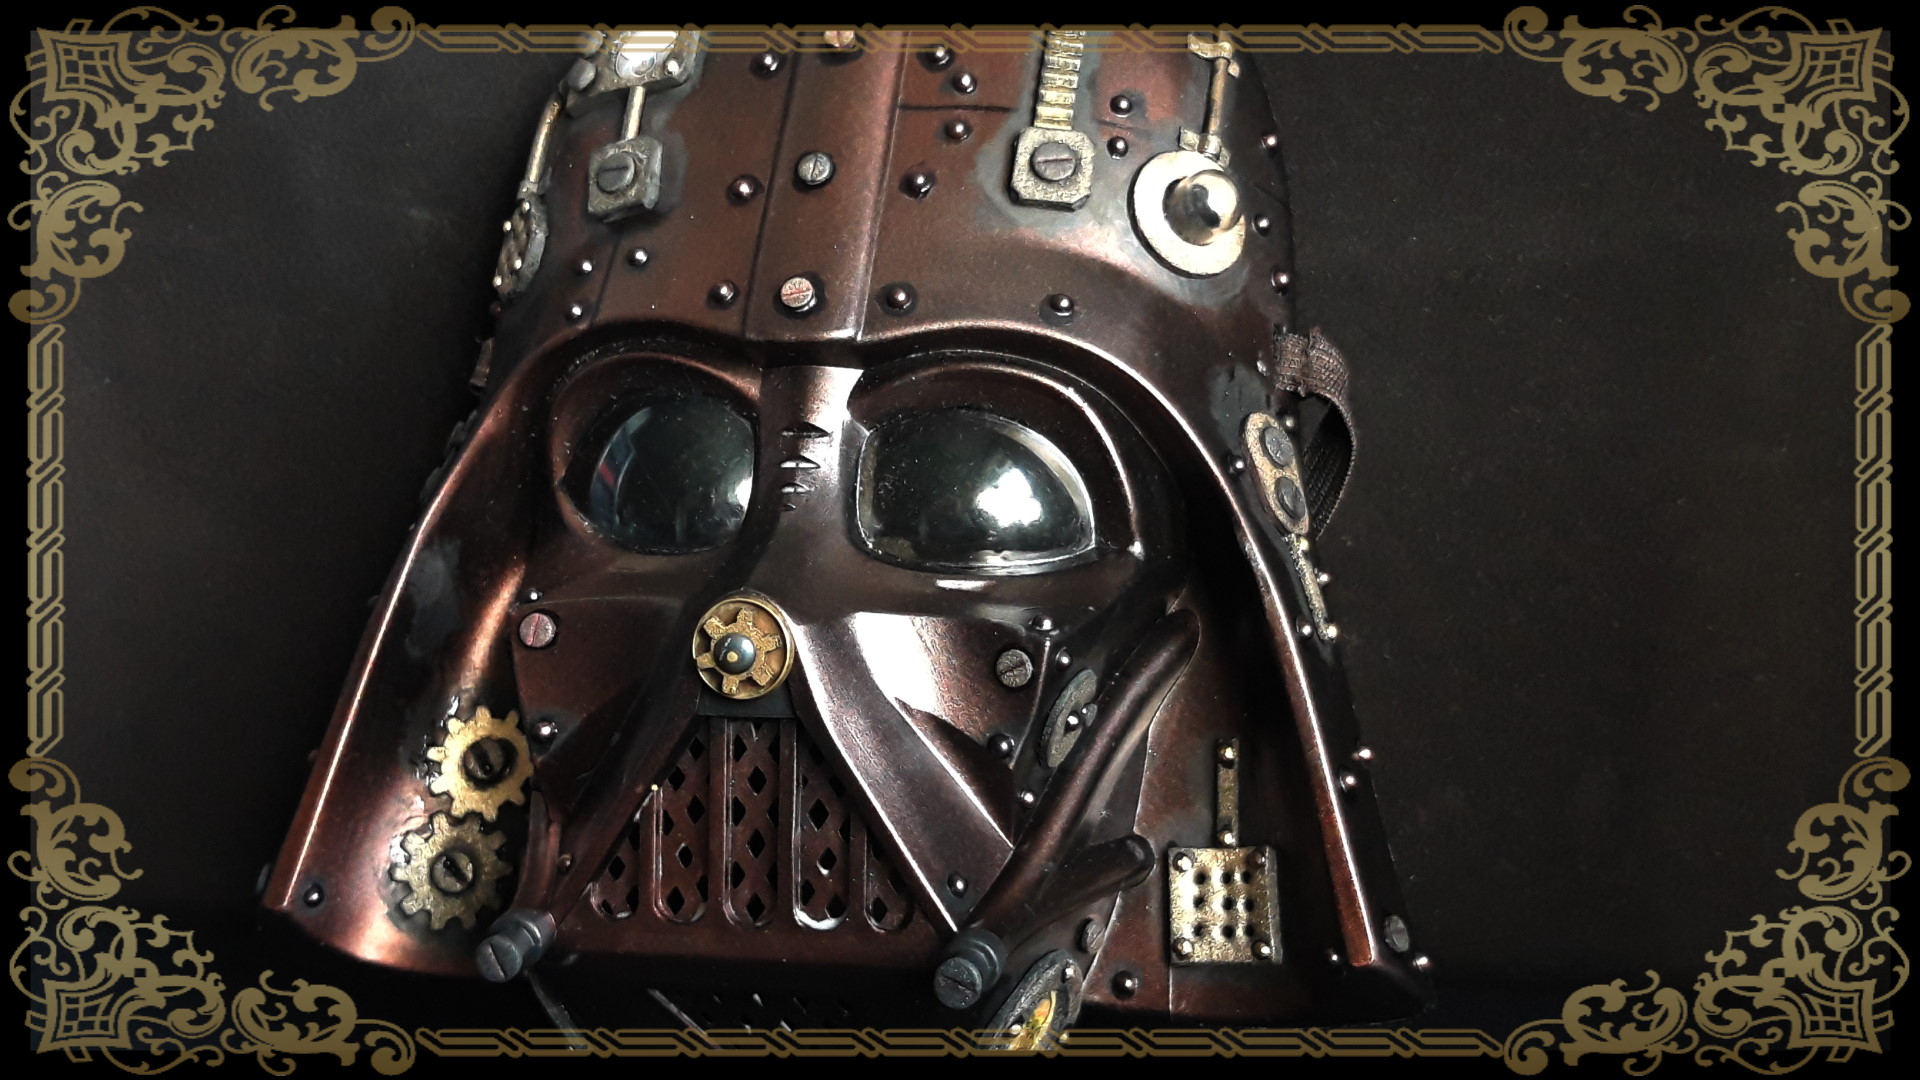 Steampunk Vader Mask